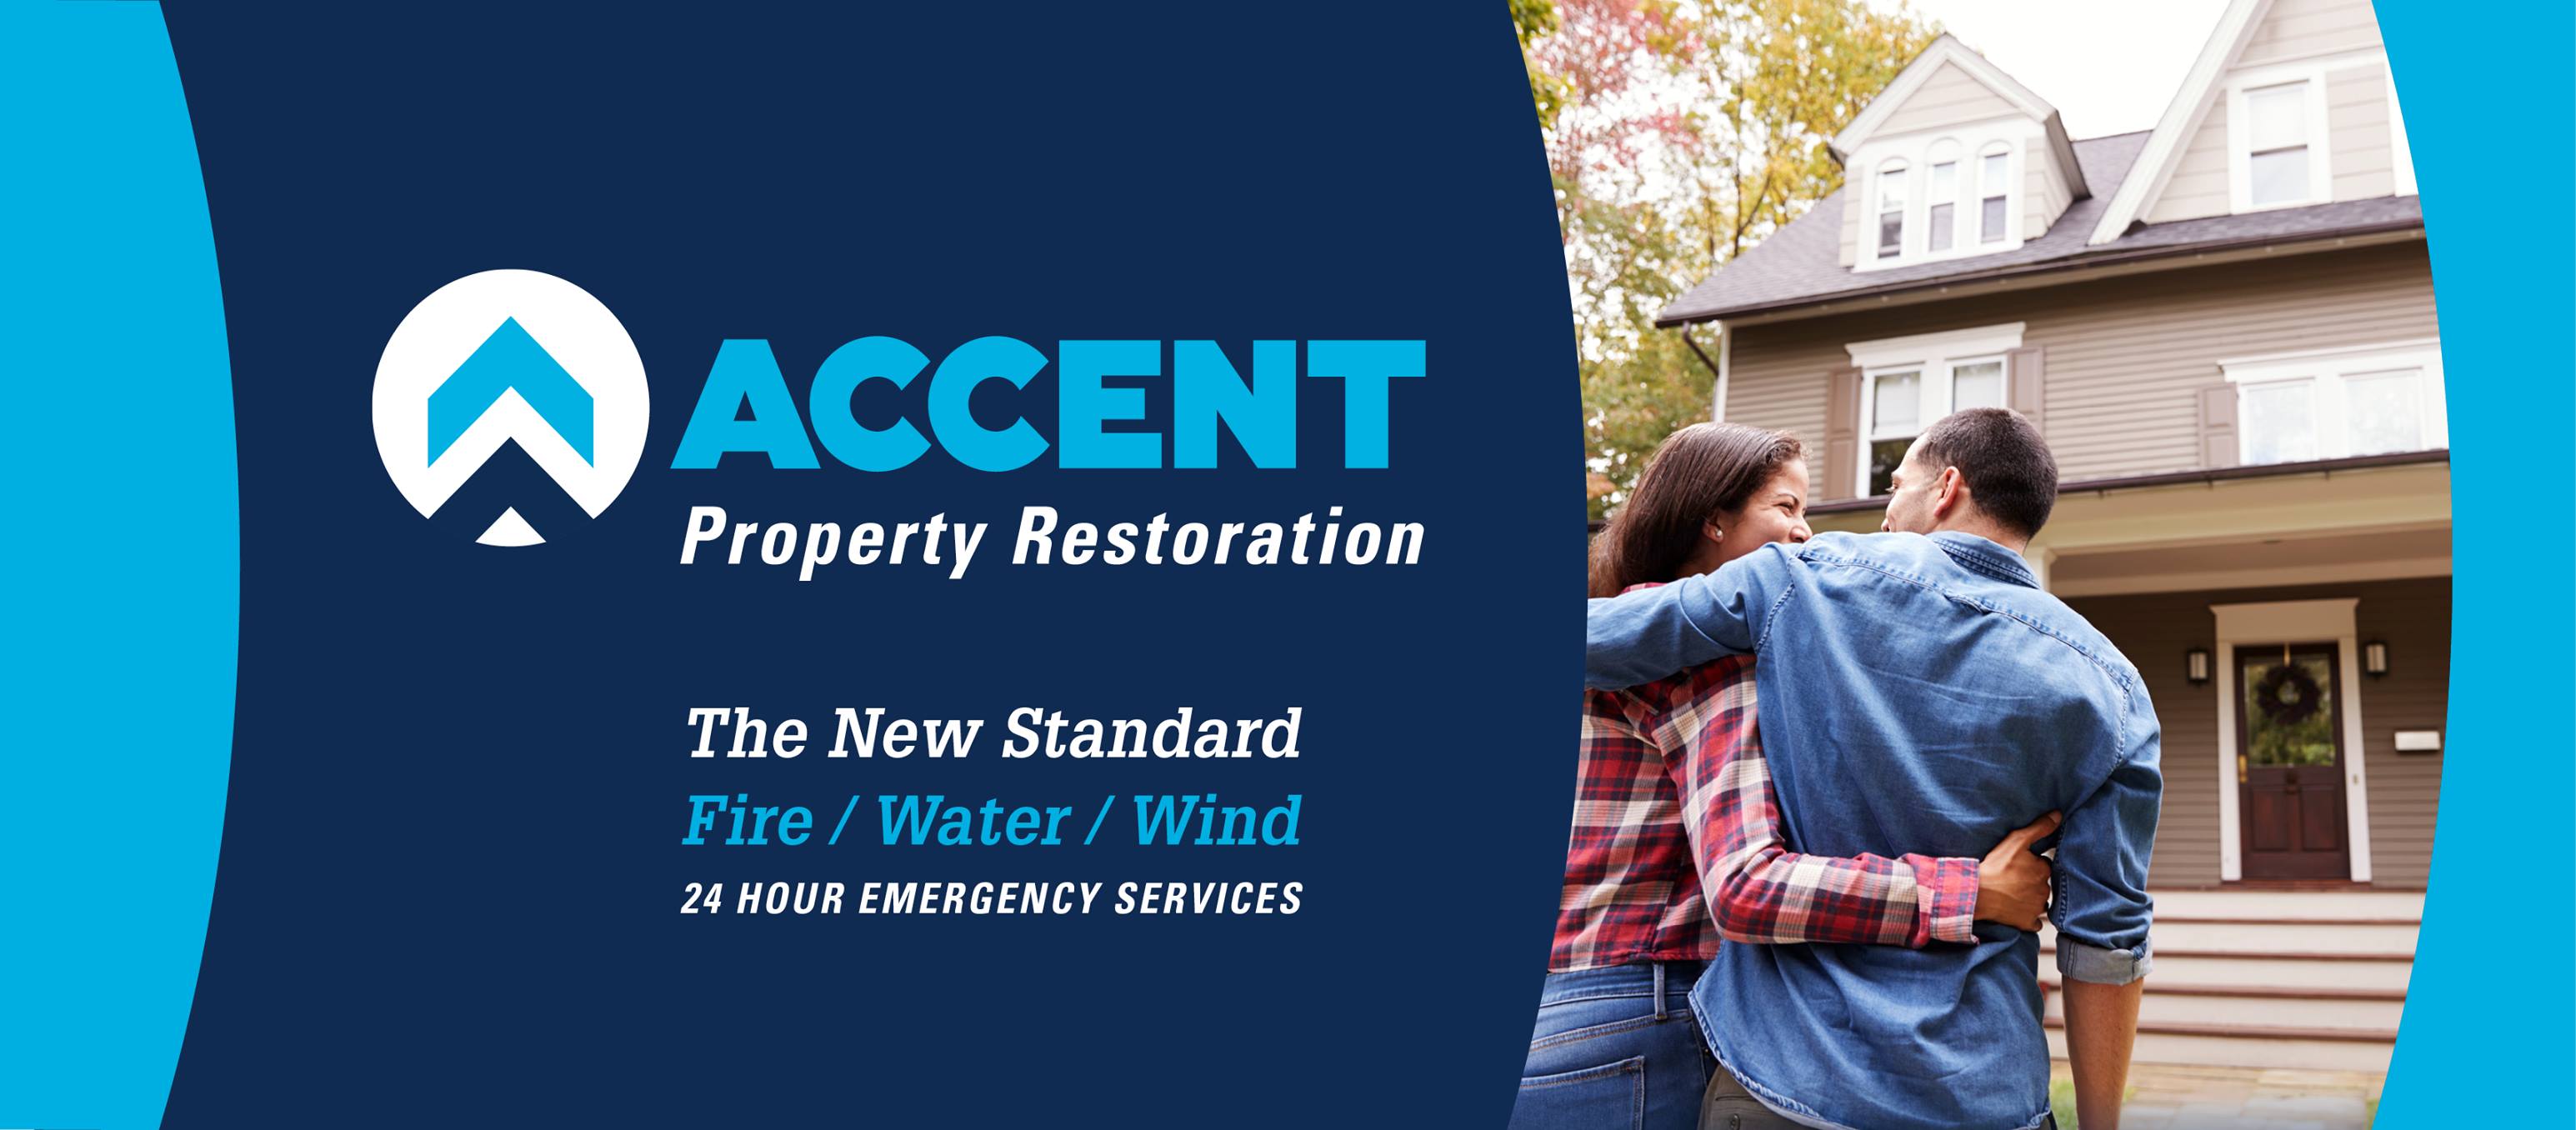 Accent Property Restoration